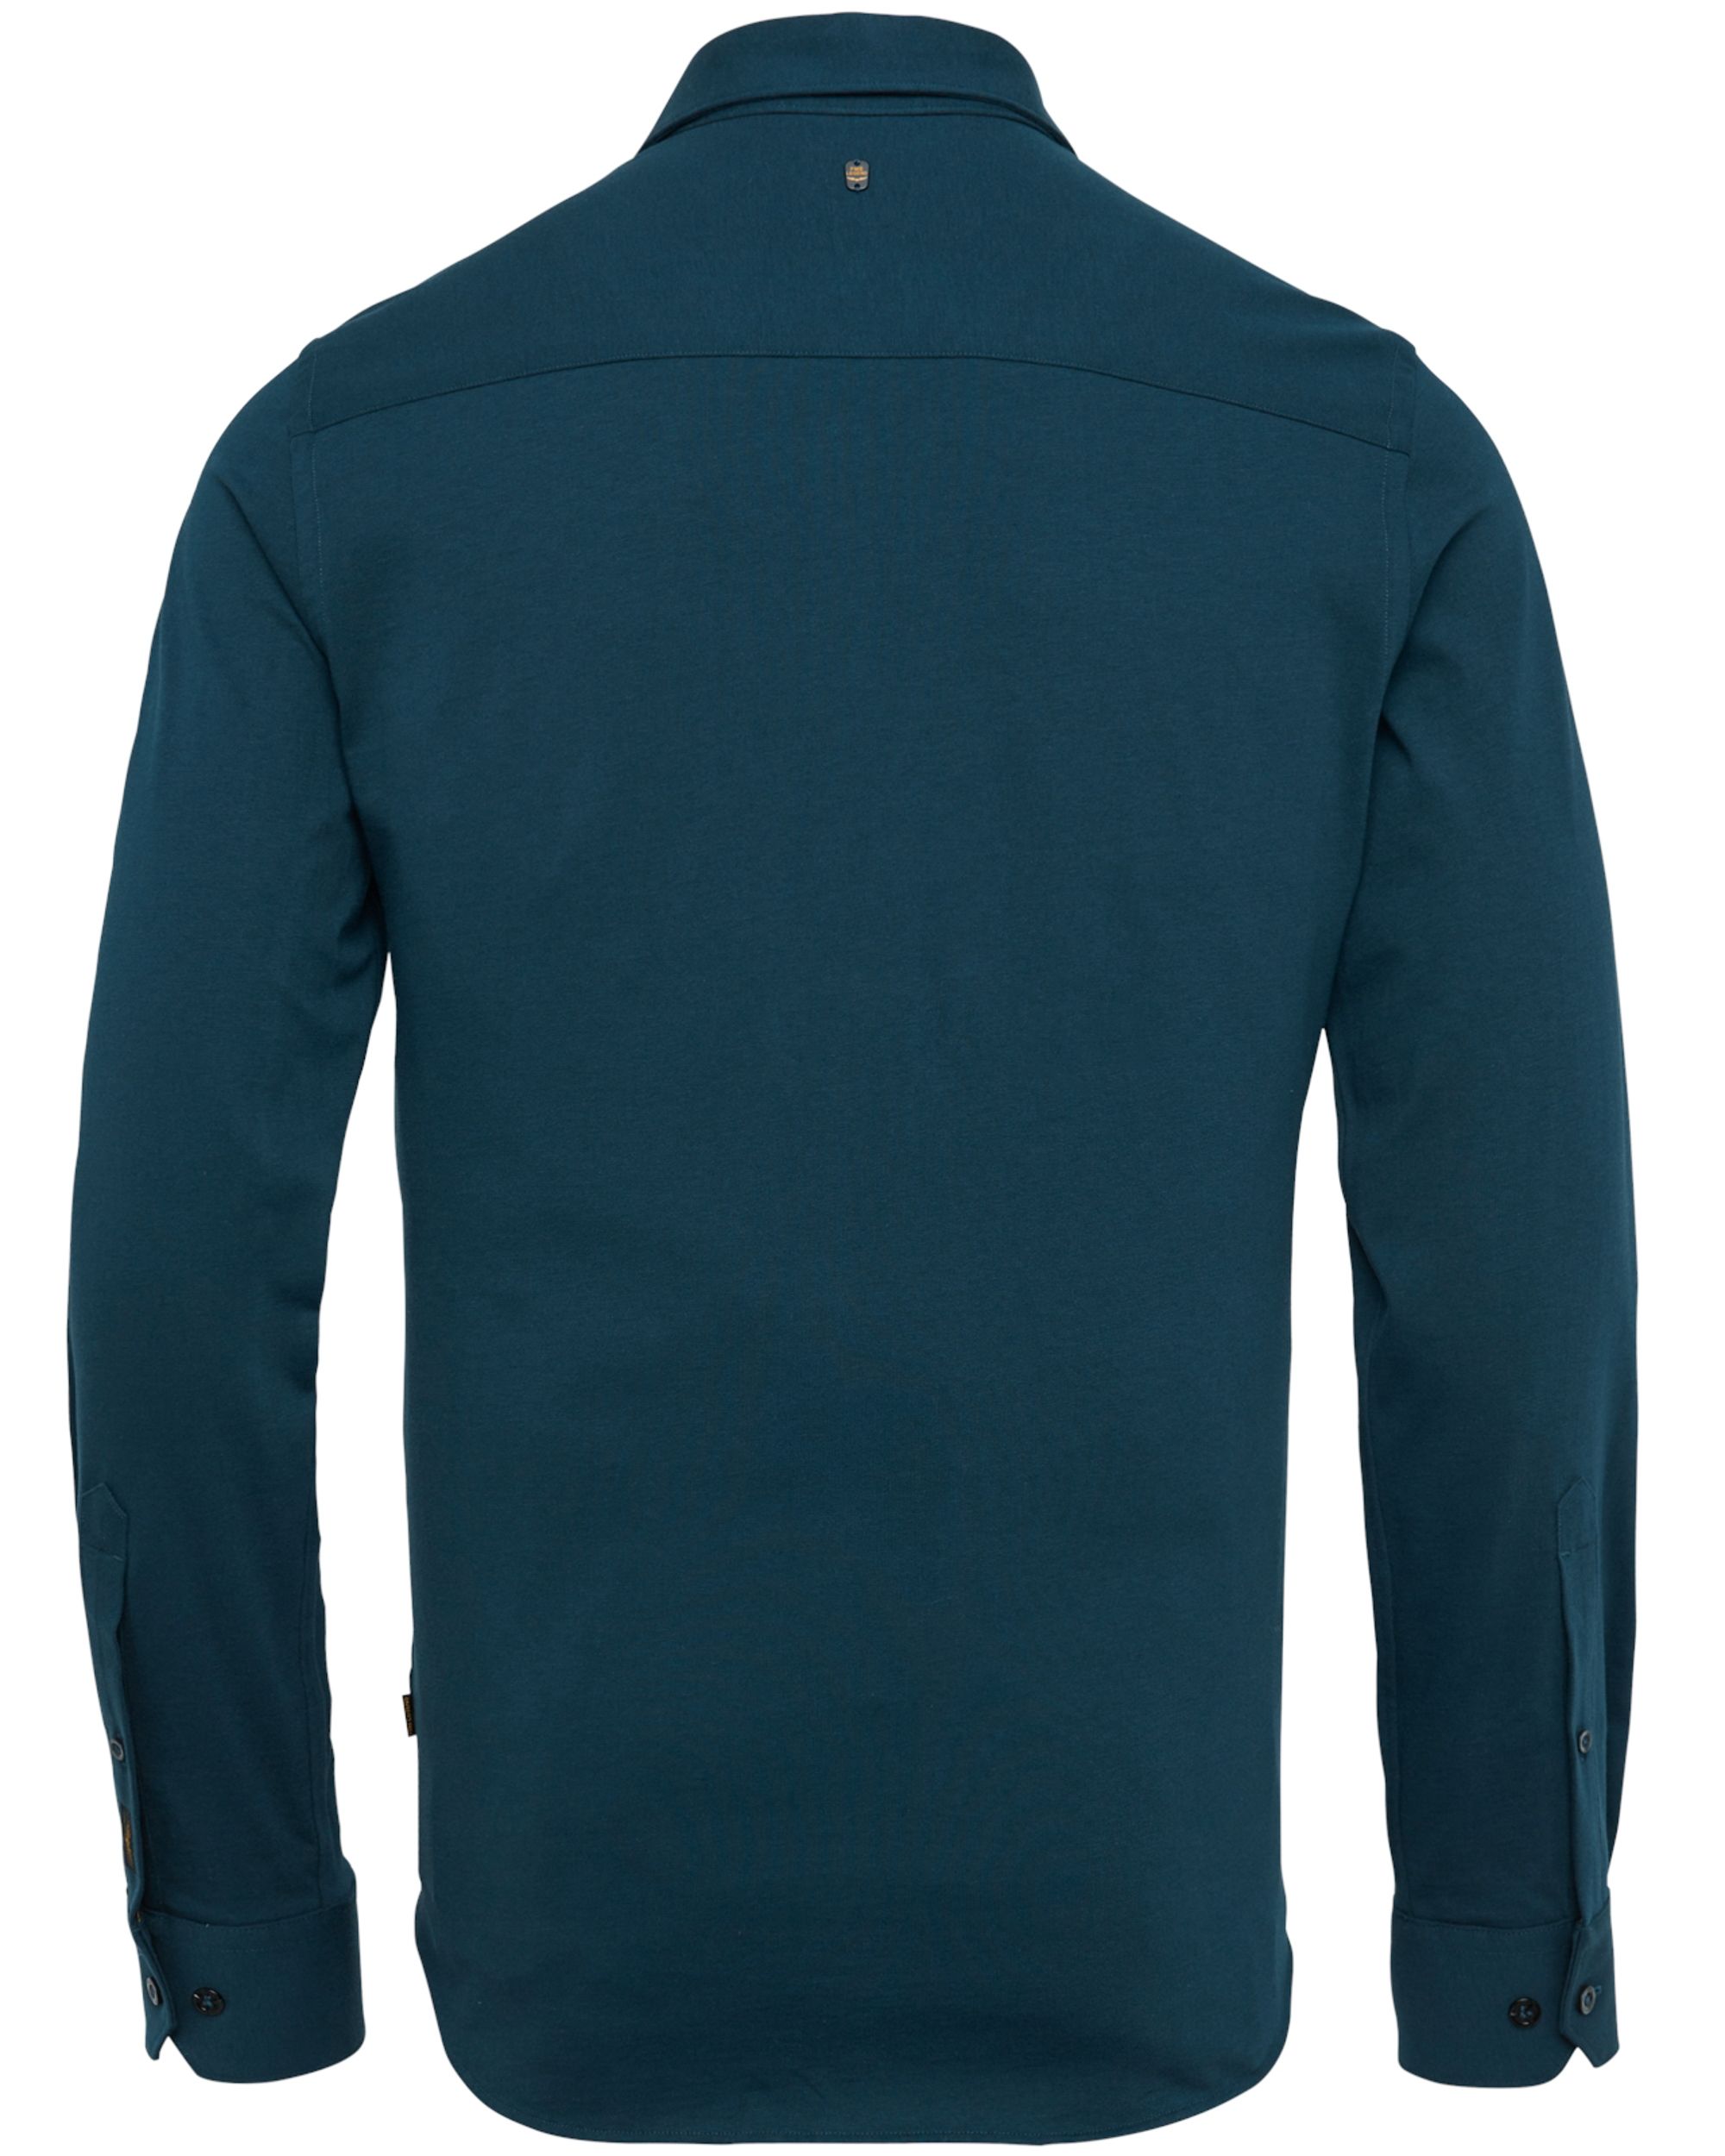 PME Legend Casual Overhemd LM Blauw 084959-001-L